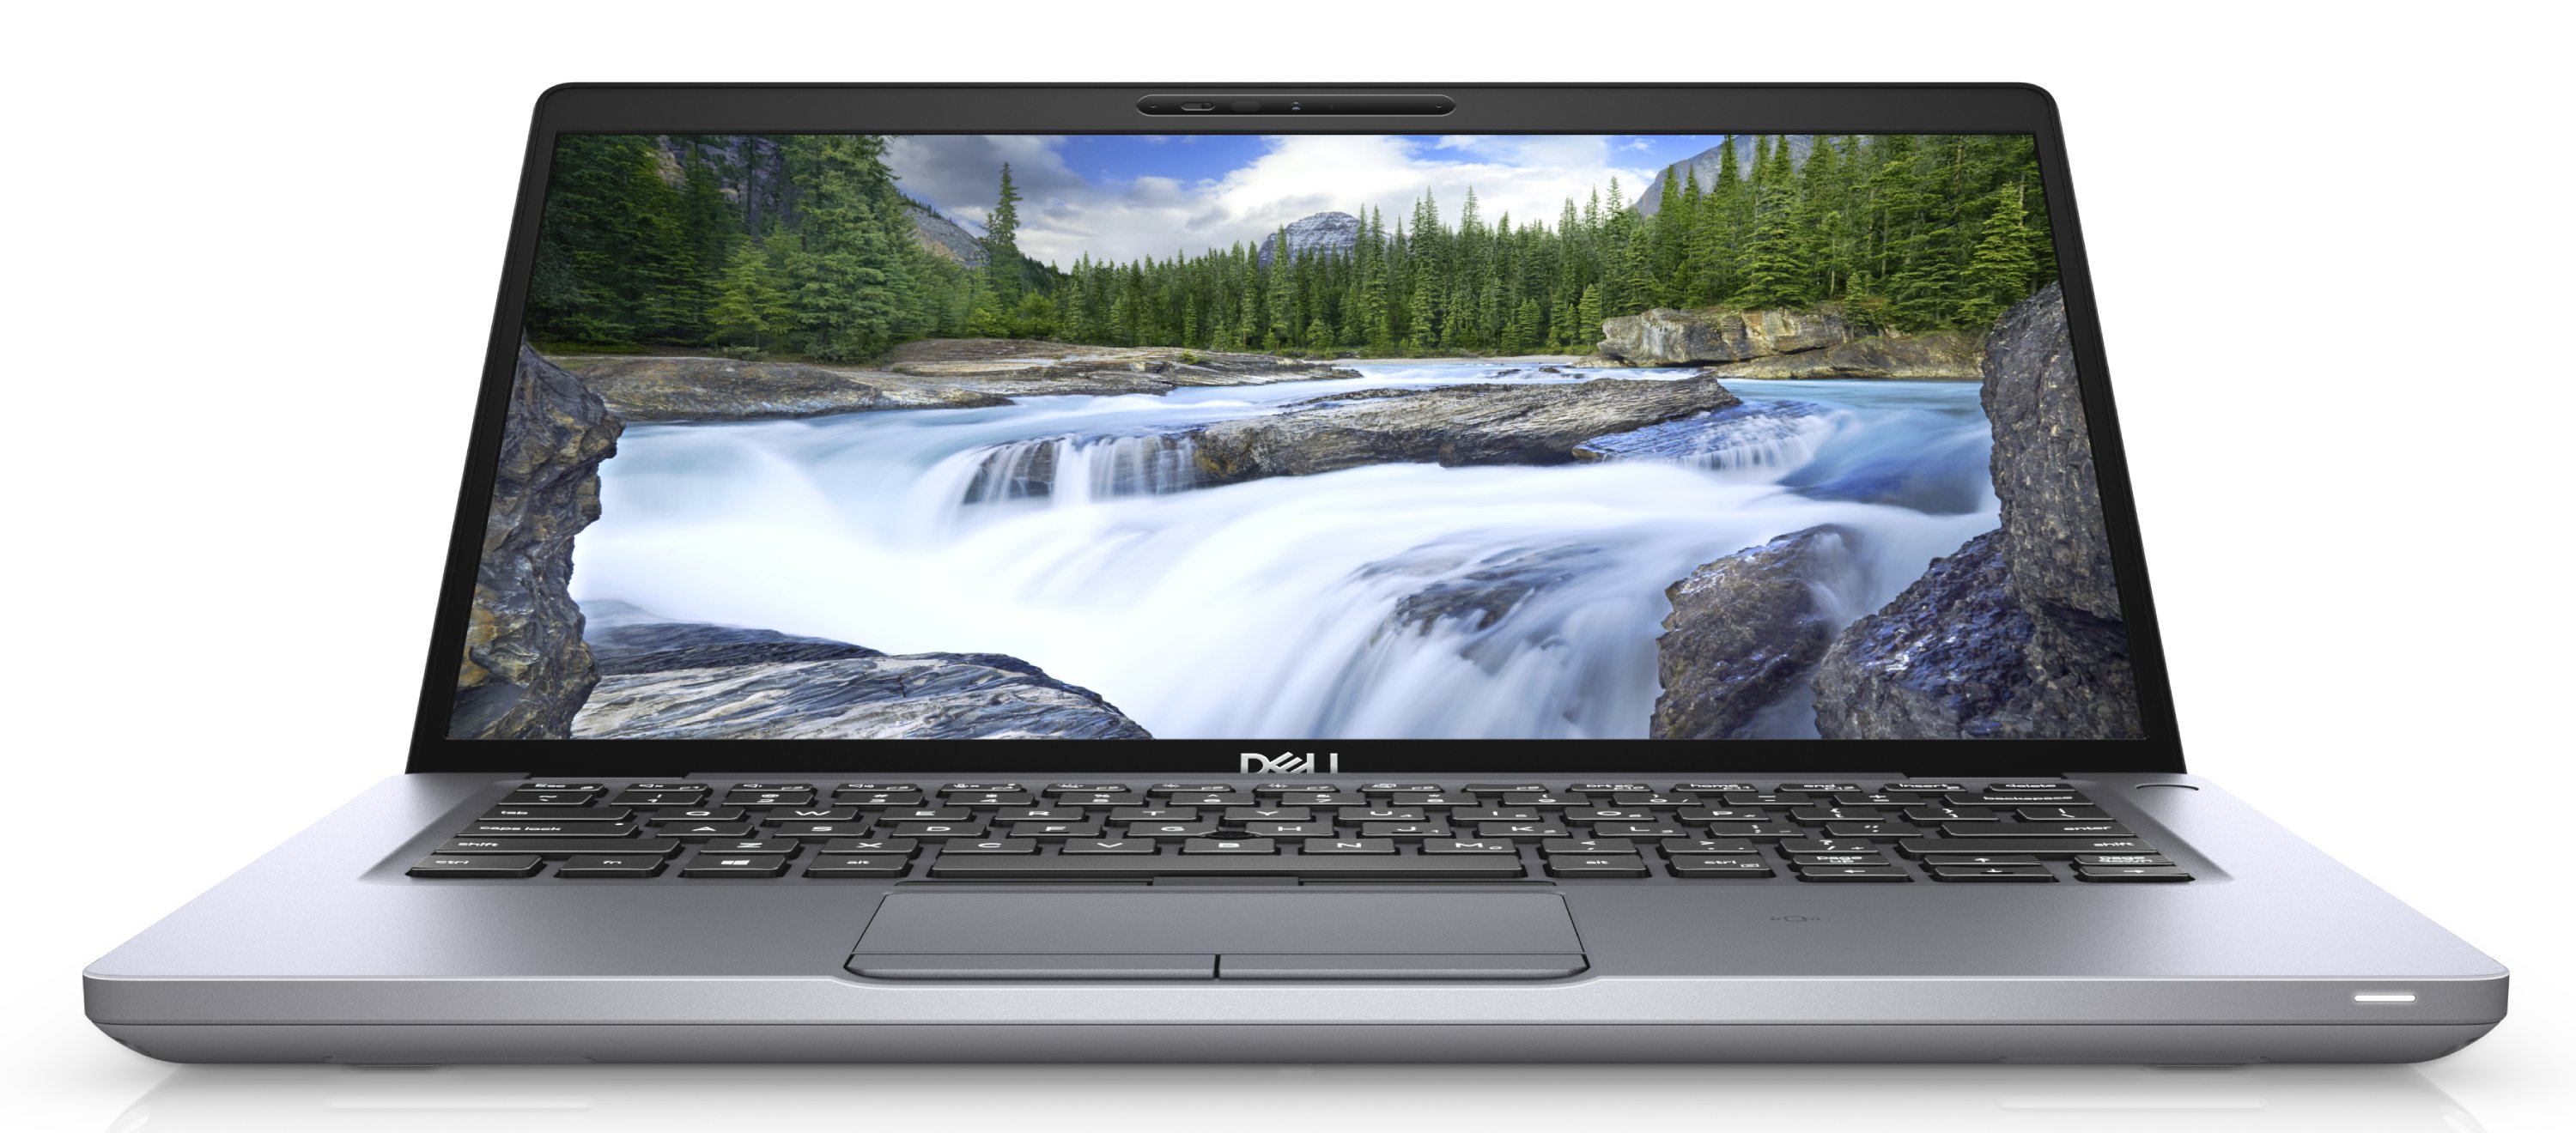 Ноутбук Dell Latitude 5410 Core i7-10610U (1,8GHz)14,0" FullHD WVA Antiglare 300 nits 16GB (1x16GB) DDR4 512GB SSD Intel UHD 620 FPR,TPM,Smart Card,vPro,4G LTE,Thunderbolt  3,4 cell (68Whr) W10 Pro 3y NBD Gray-39136